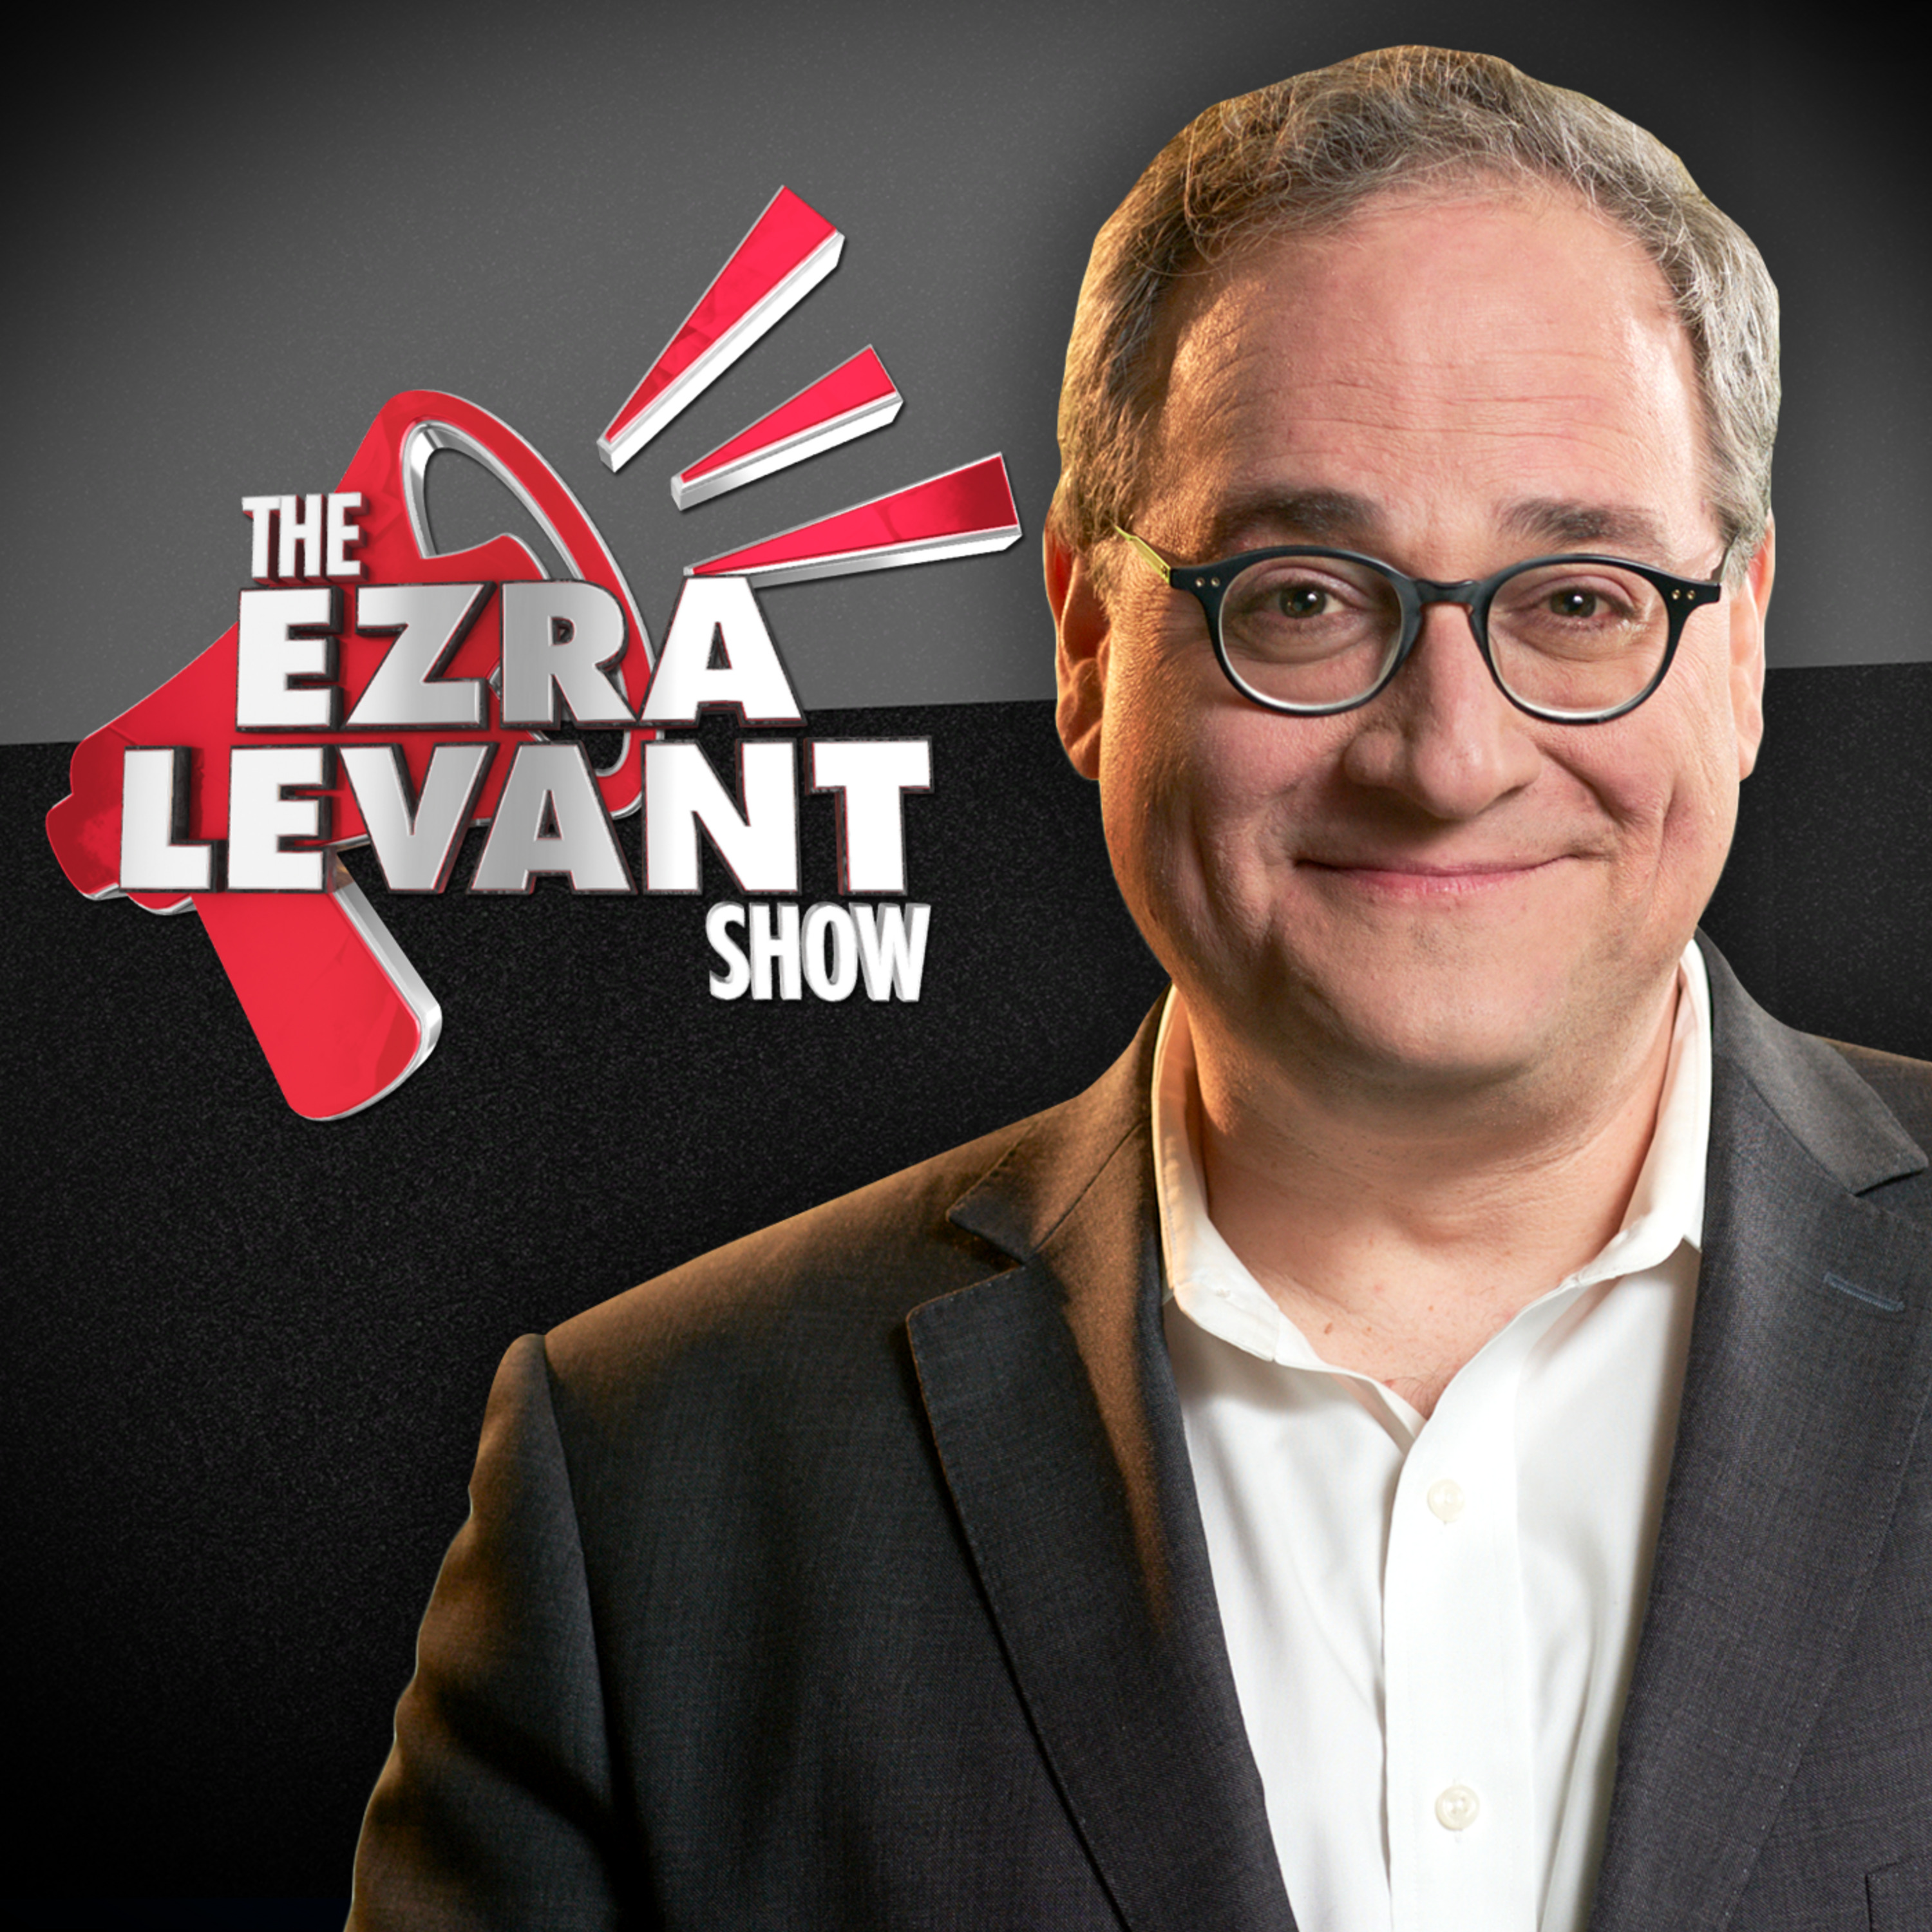 EZRA LEVANT | 30 ways Canada censors its citizens